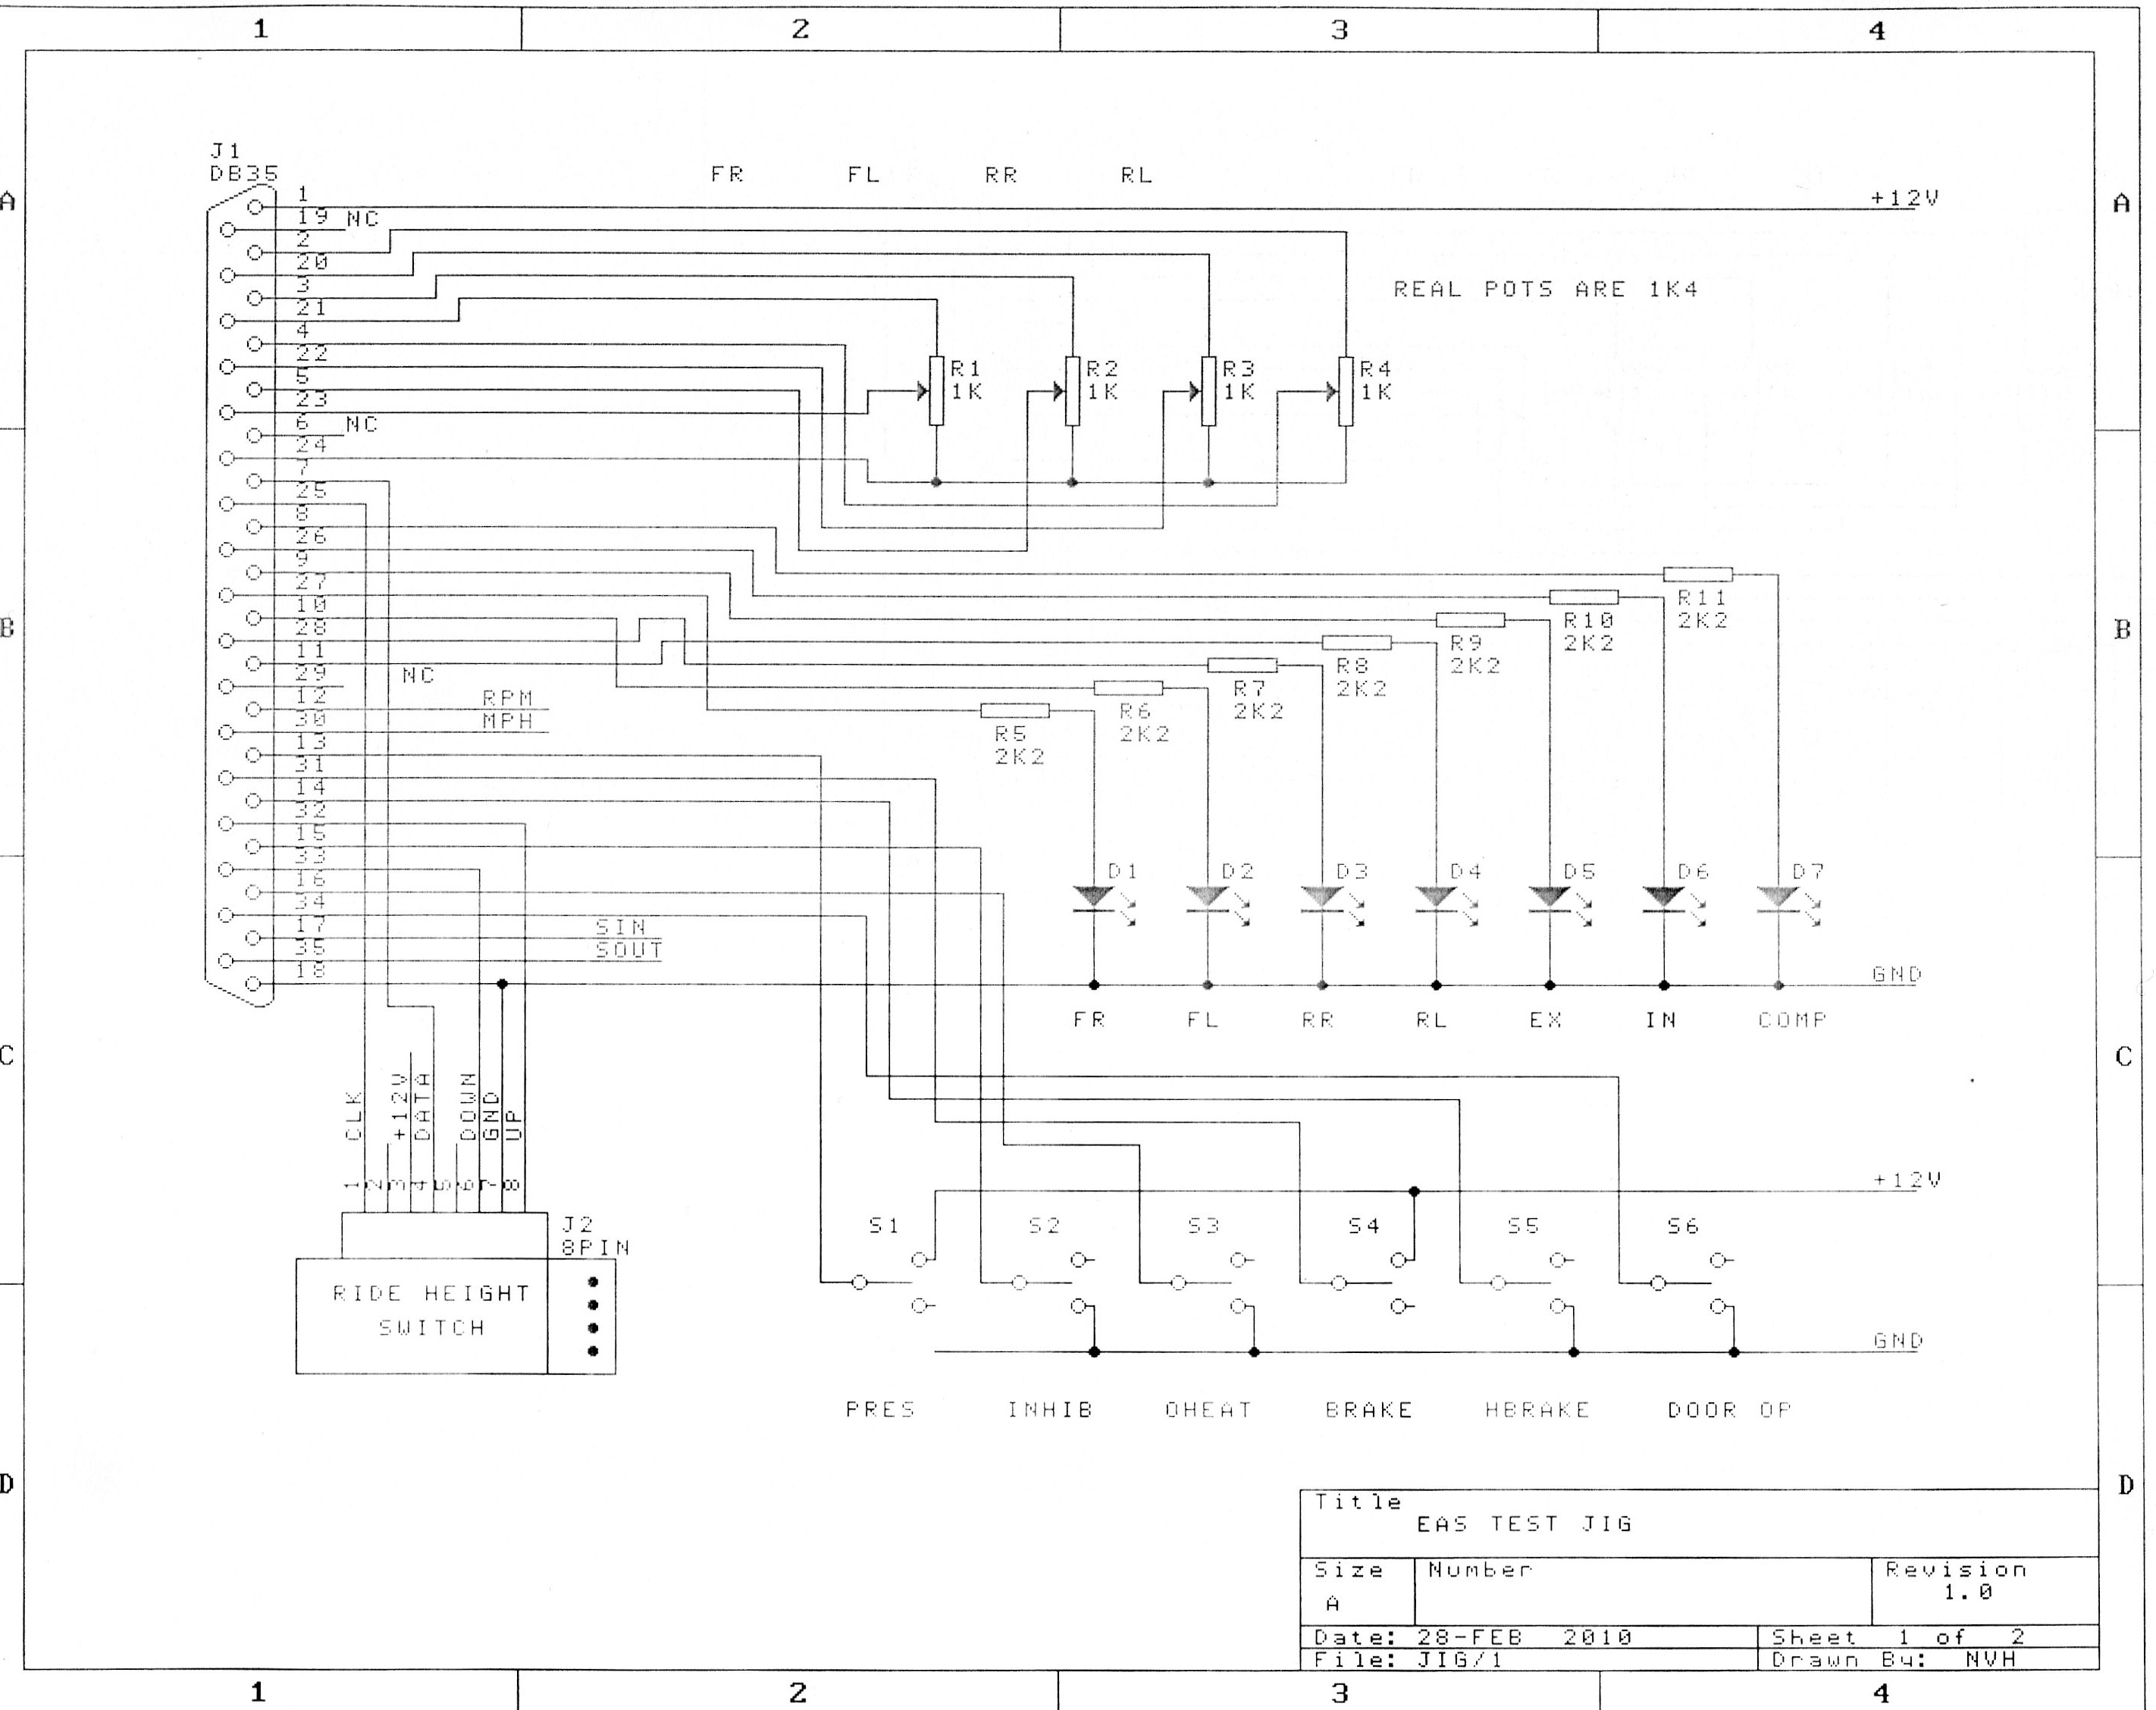 [DIAGRAM] Land Rover 110 Wiring Diagram FULL Version HD Quality Wiring